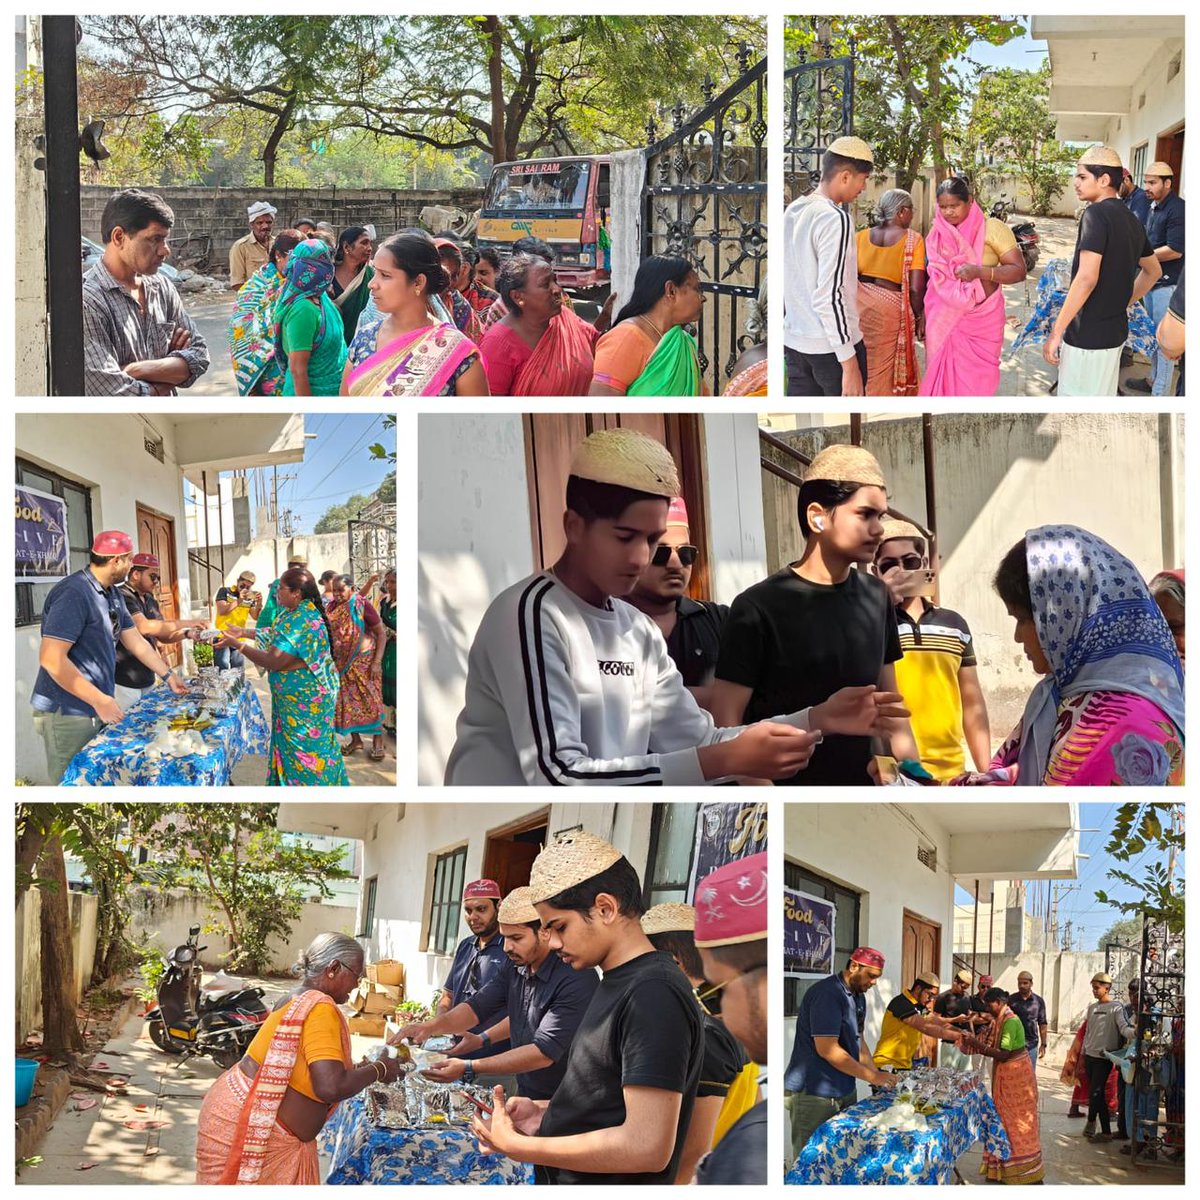 Majlis Khuddamul Ahmadiyya Secunderabad organized a successful food drive, distributing around 50 food packets.

 #CommunityService #AhmadiyyaMuslims #Secunderabad 🤝
#MKASecunderabad